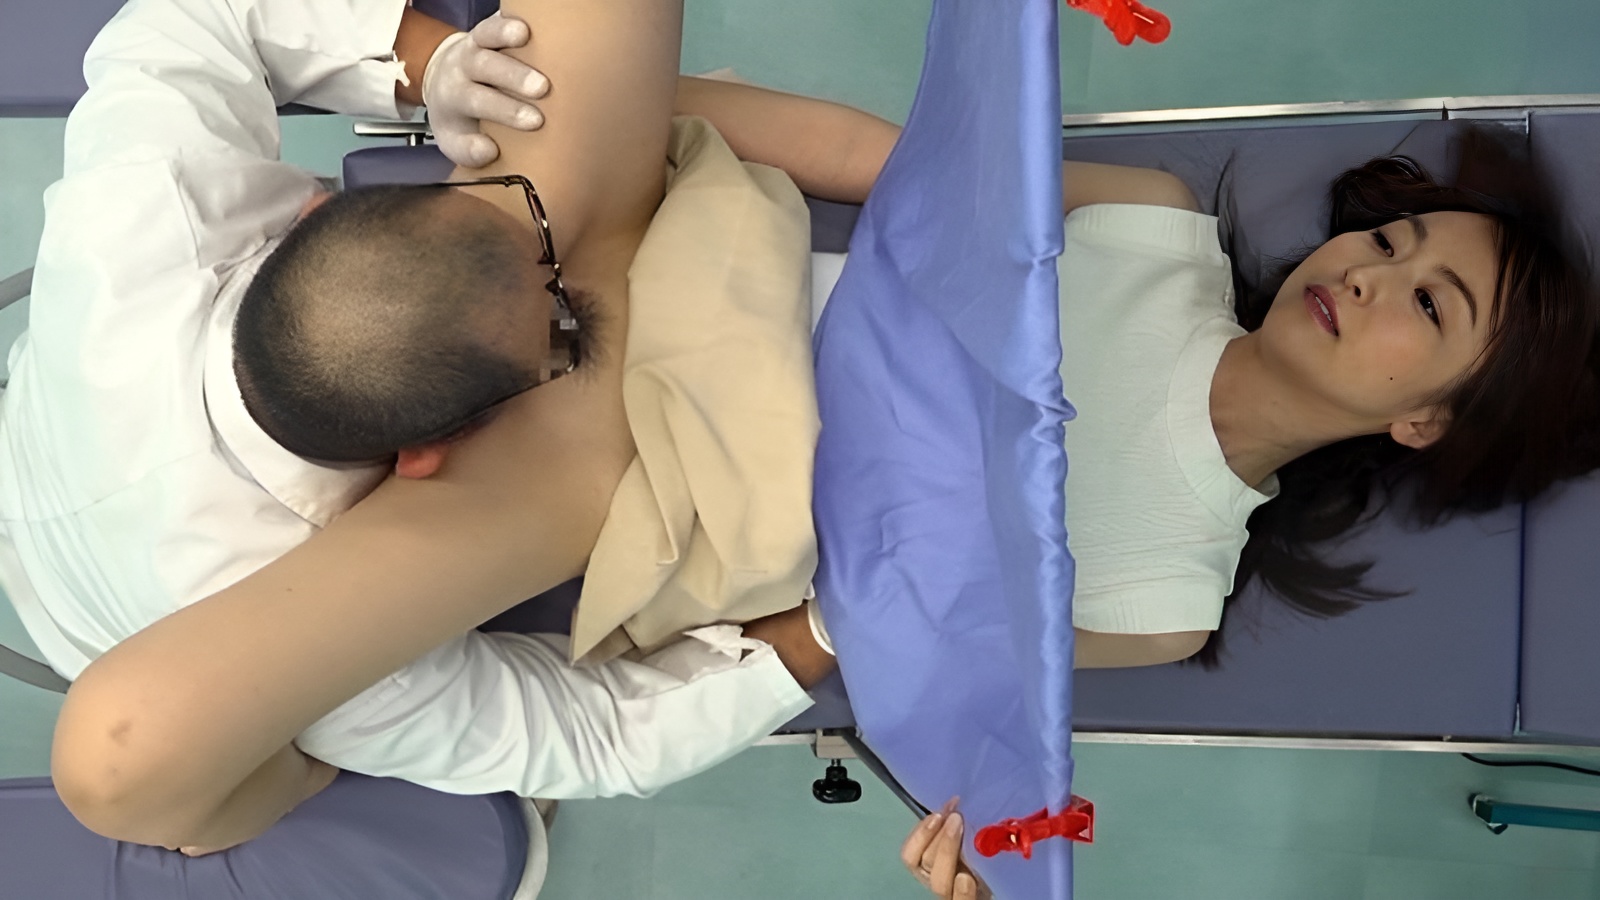 UMD-754 変態産婦人科医は患者のマンコをしゃぶるのが大好き